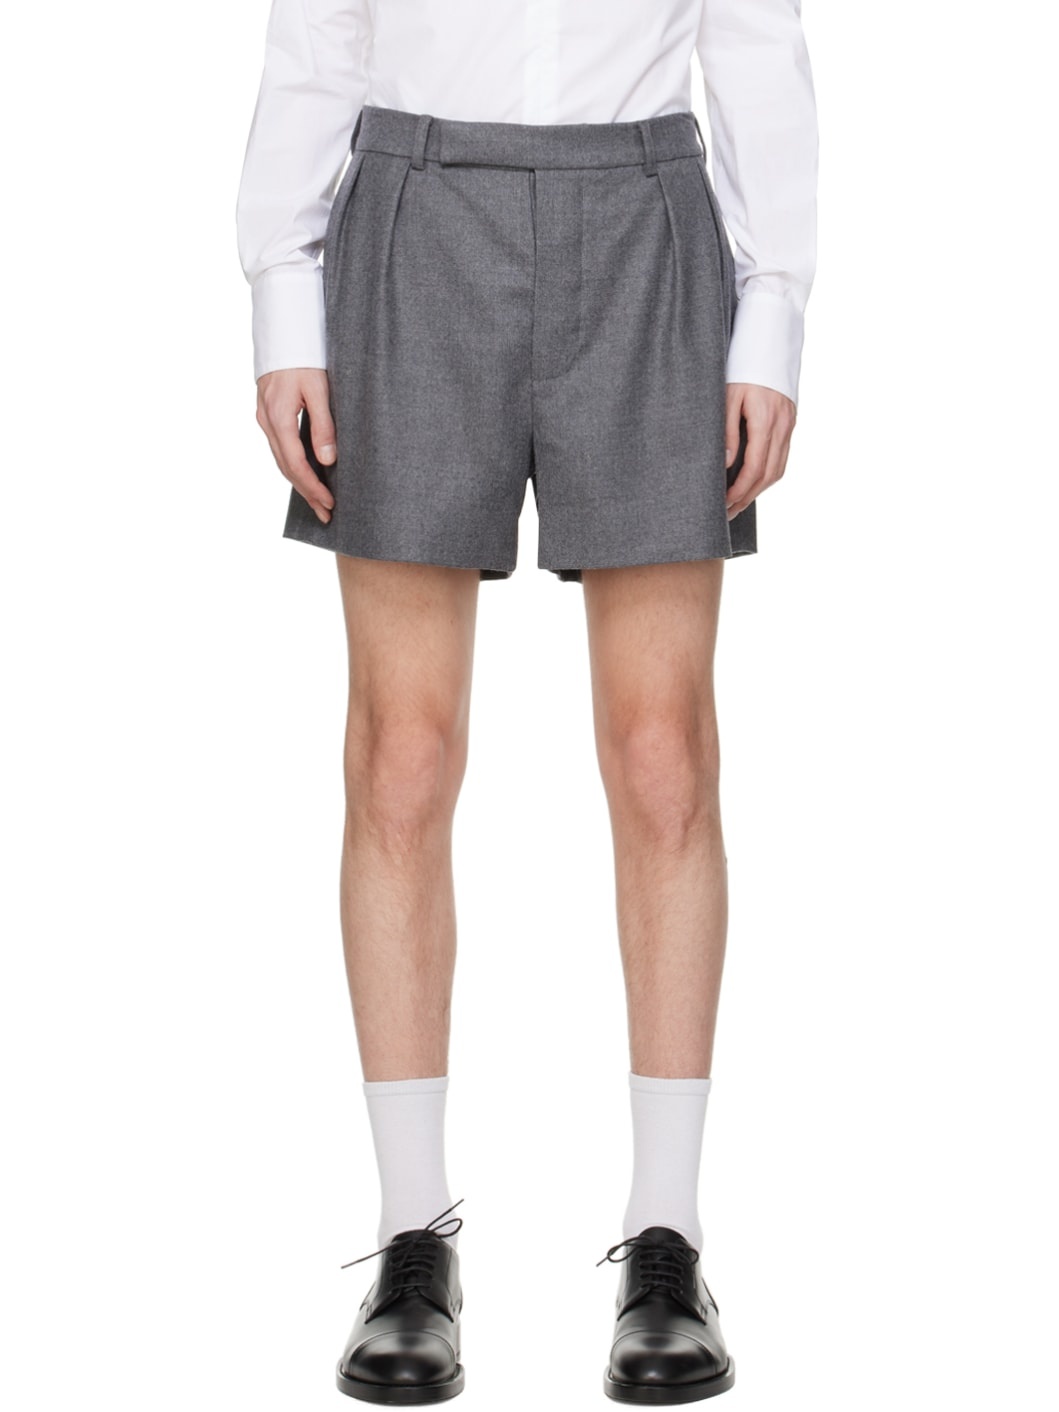 SSENSE Exclusive Gray Atero Shorts - 1